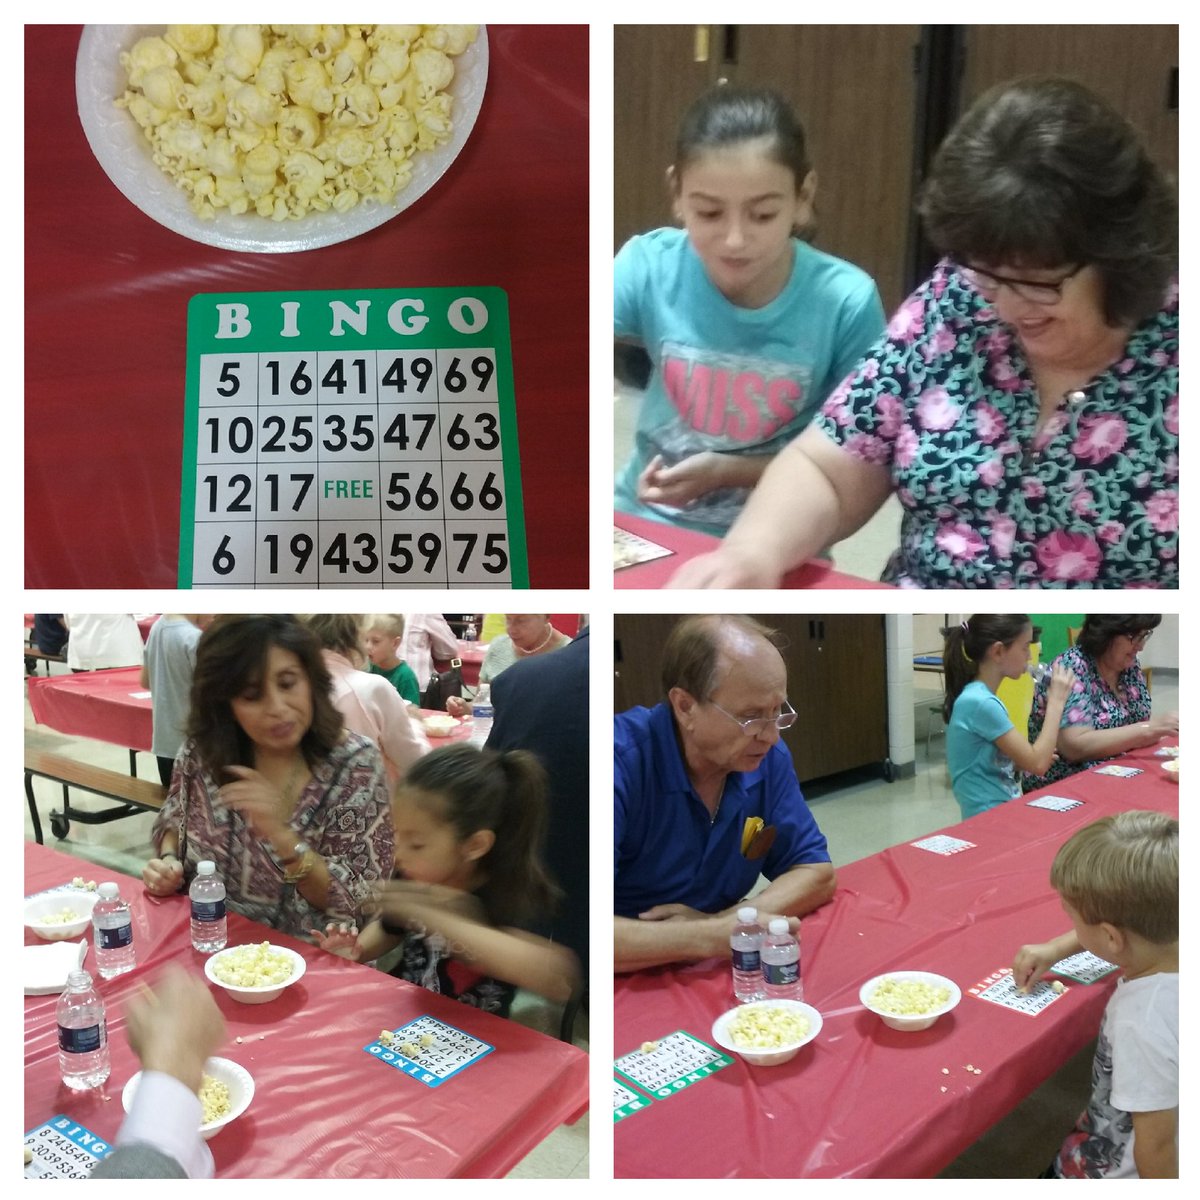 More Bingo fun with Grandparents at #Gower62!  # grandparentlove #bingofun